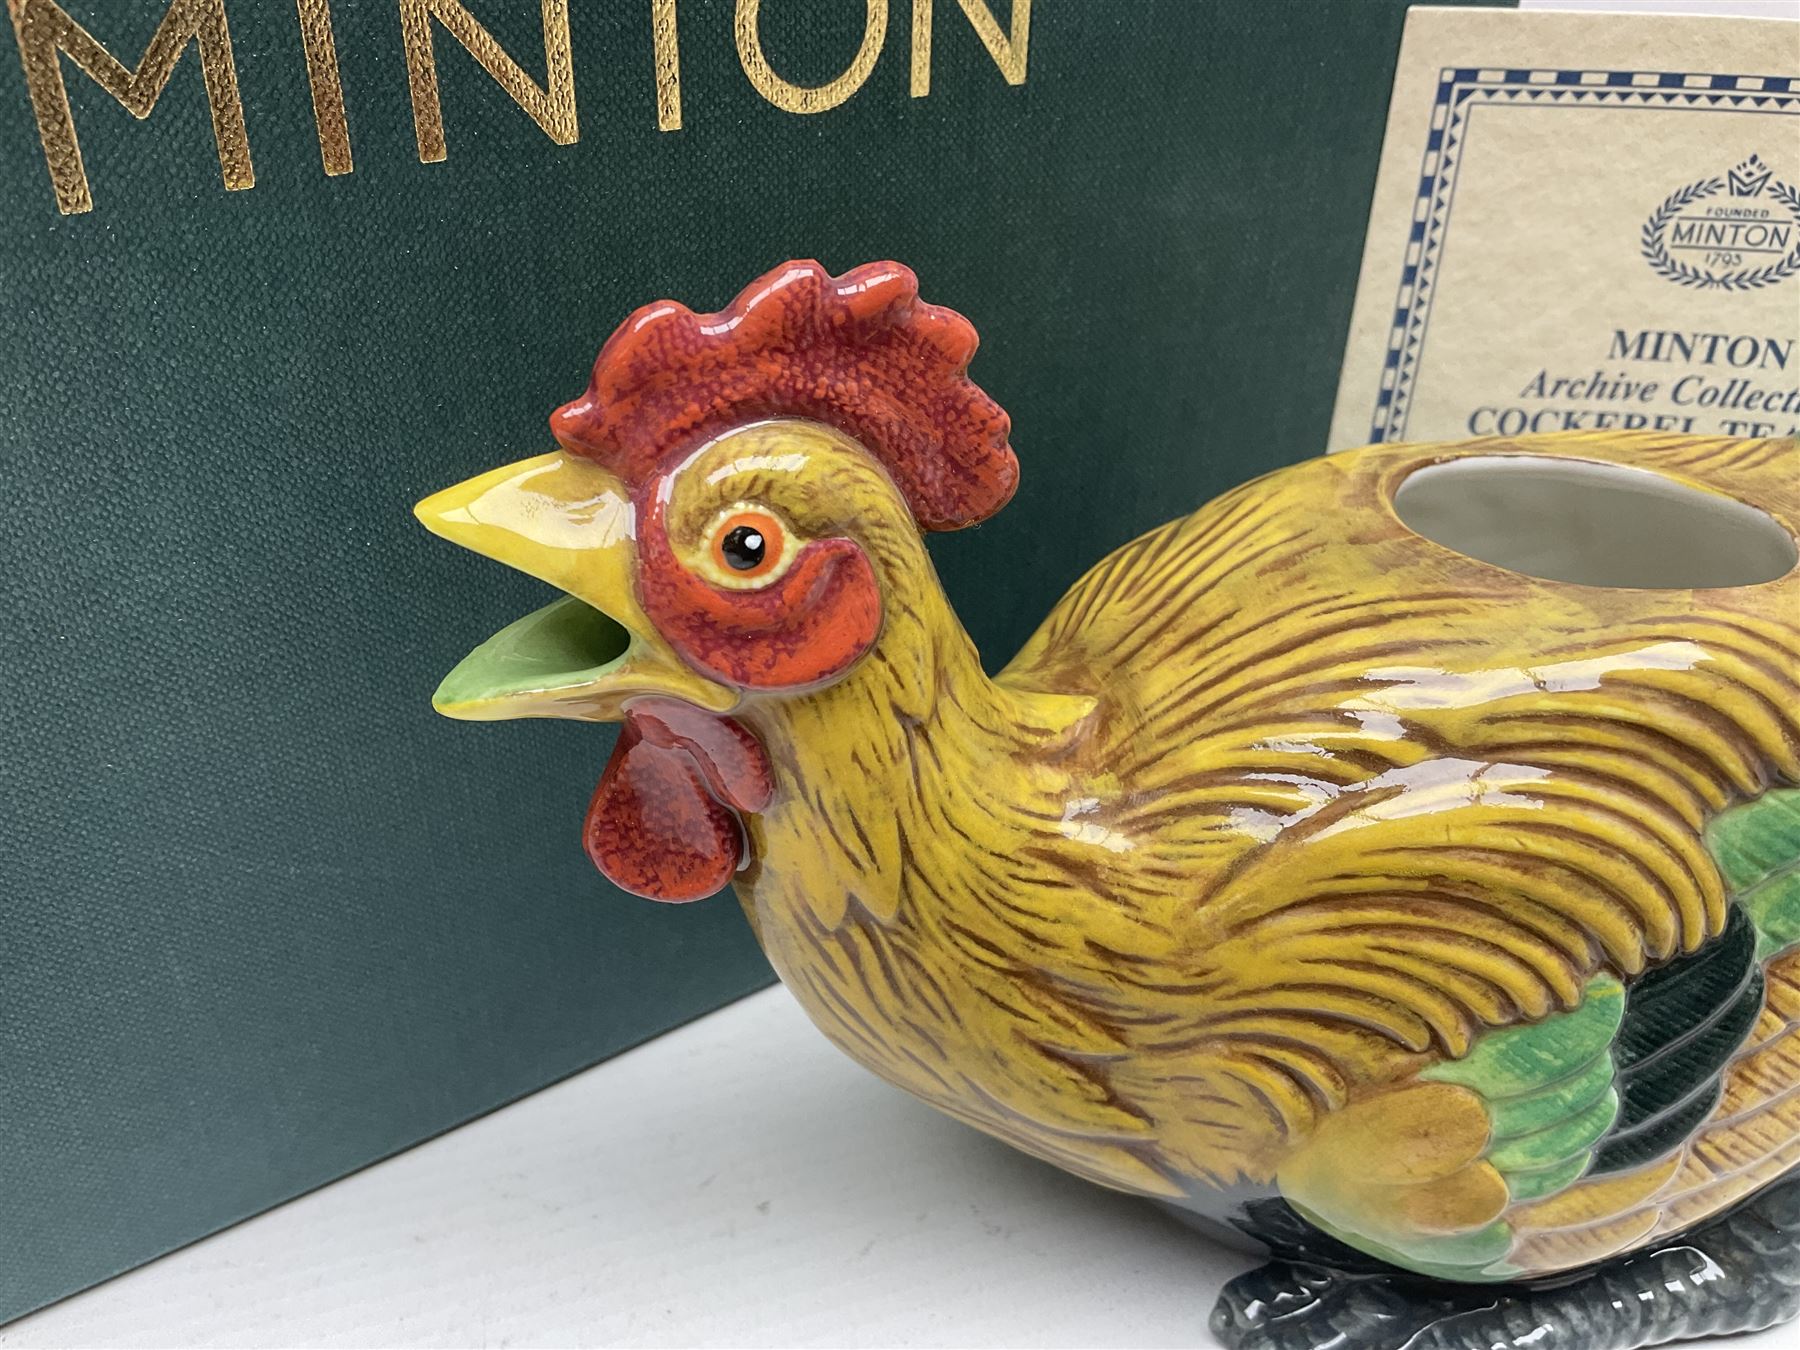 Minton Archive collection cockerel teapot - Image 9 of 12